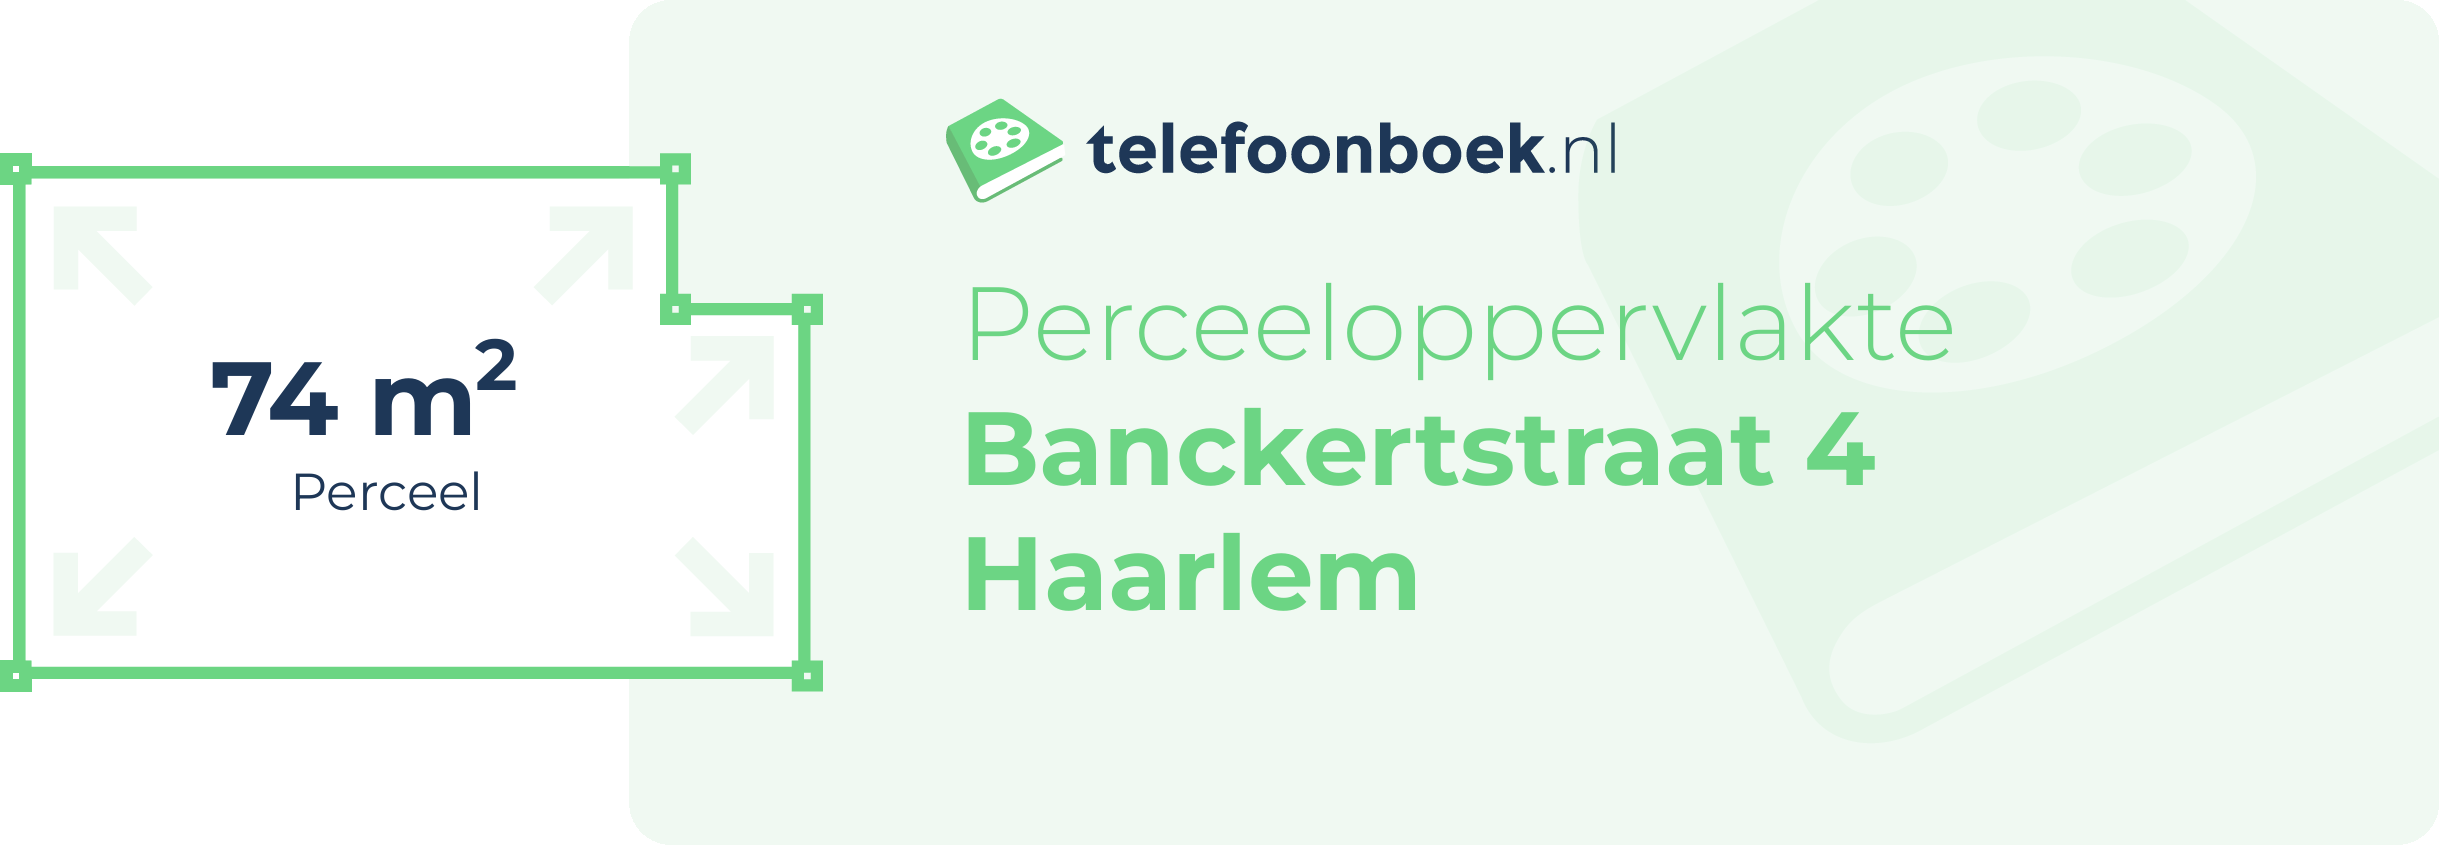 Perceeloppervlakte Banckertstraat 4 Haarlem